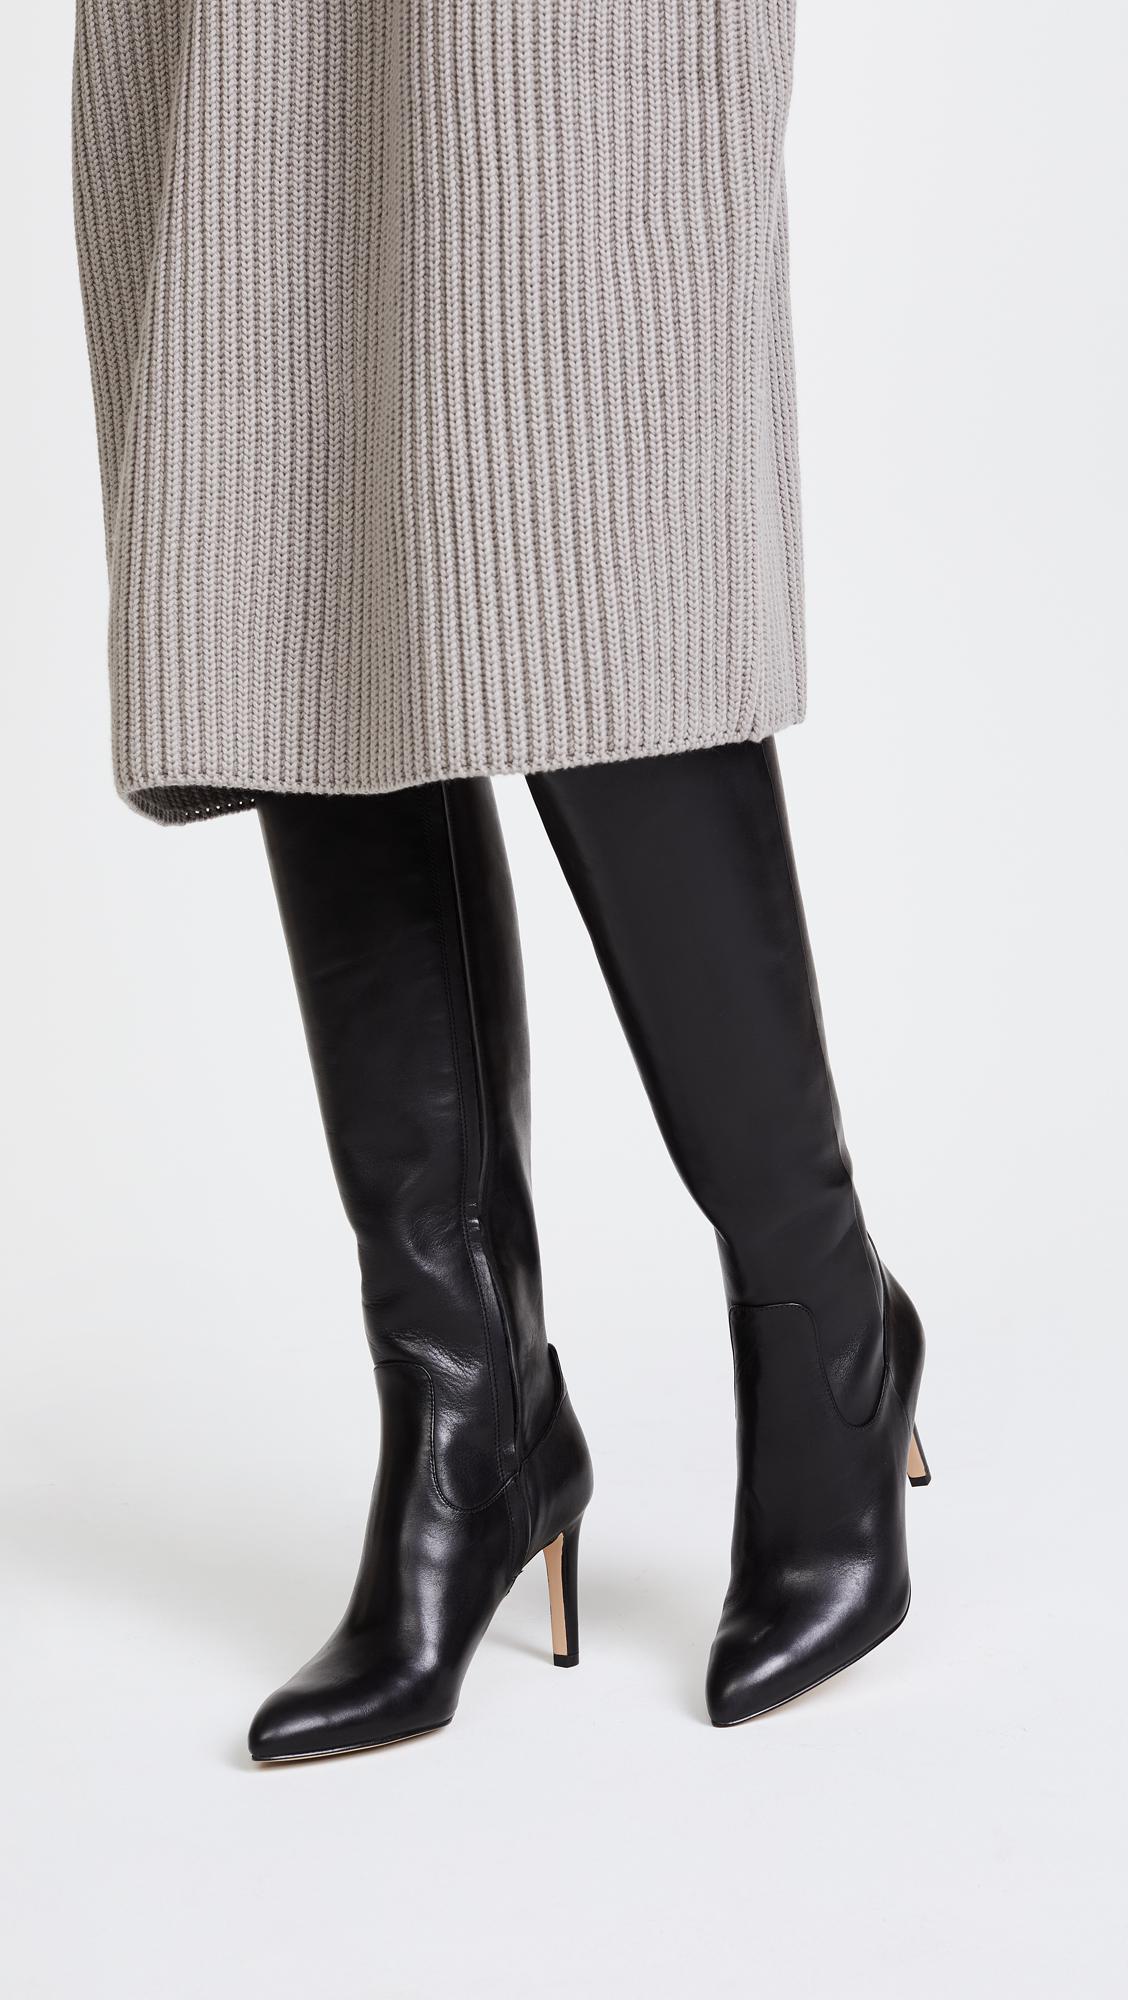 Sam Edelman Leather Olencia Tall Boots in Black - Lyst